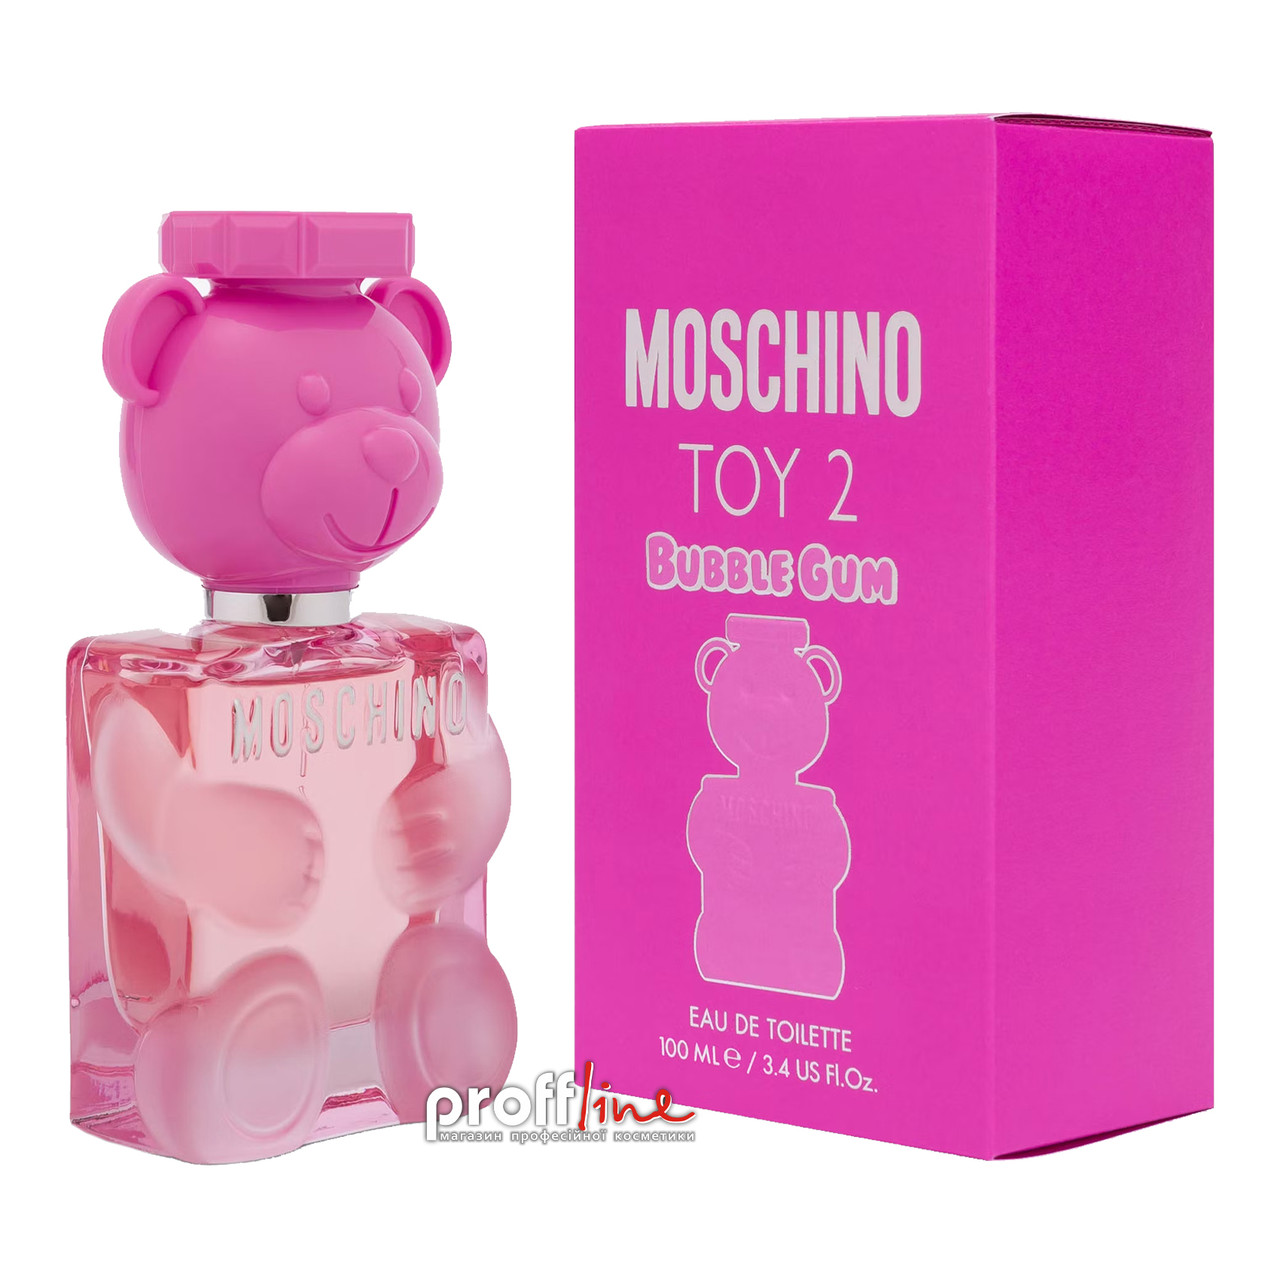 Moschino Toy 2 Bubble Gum edt 100 ml